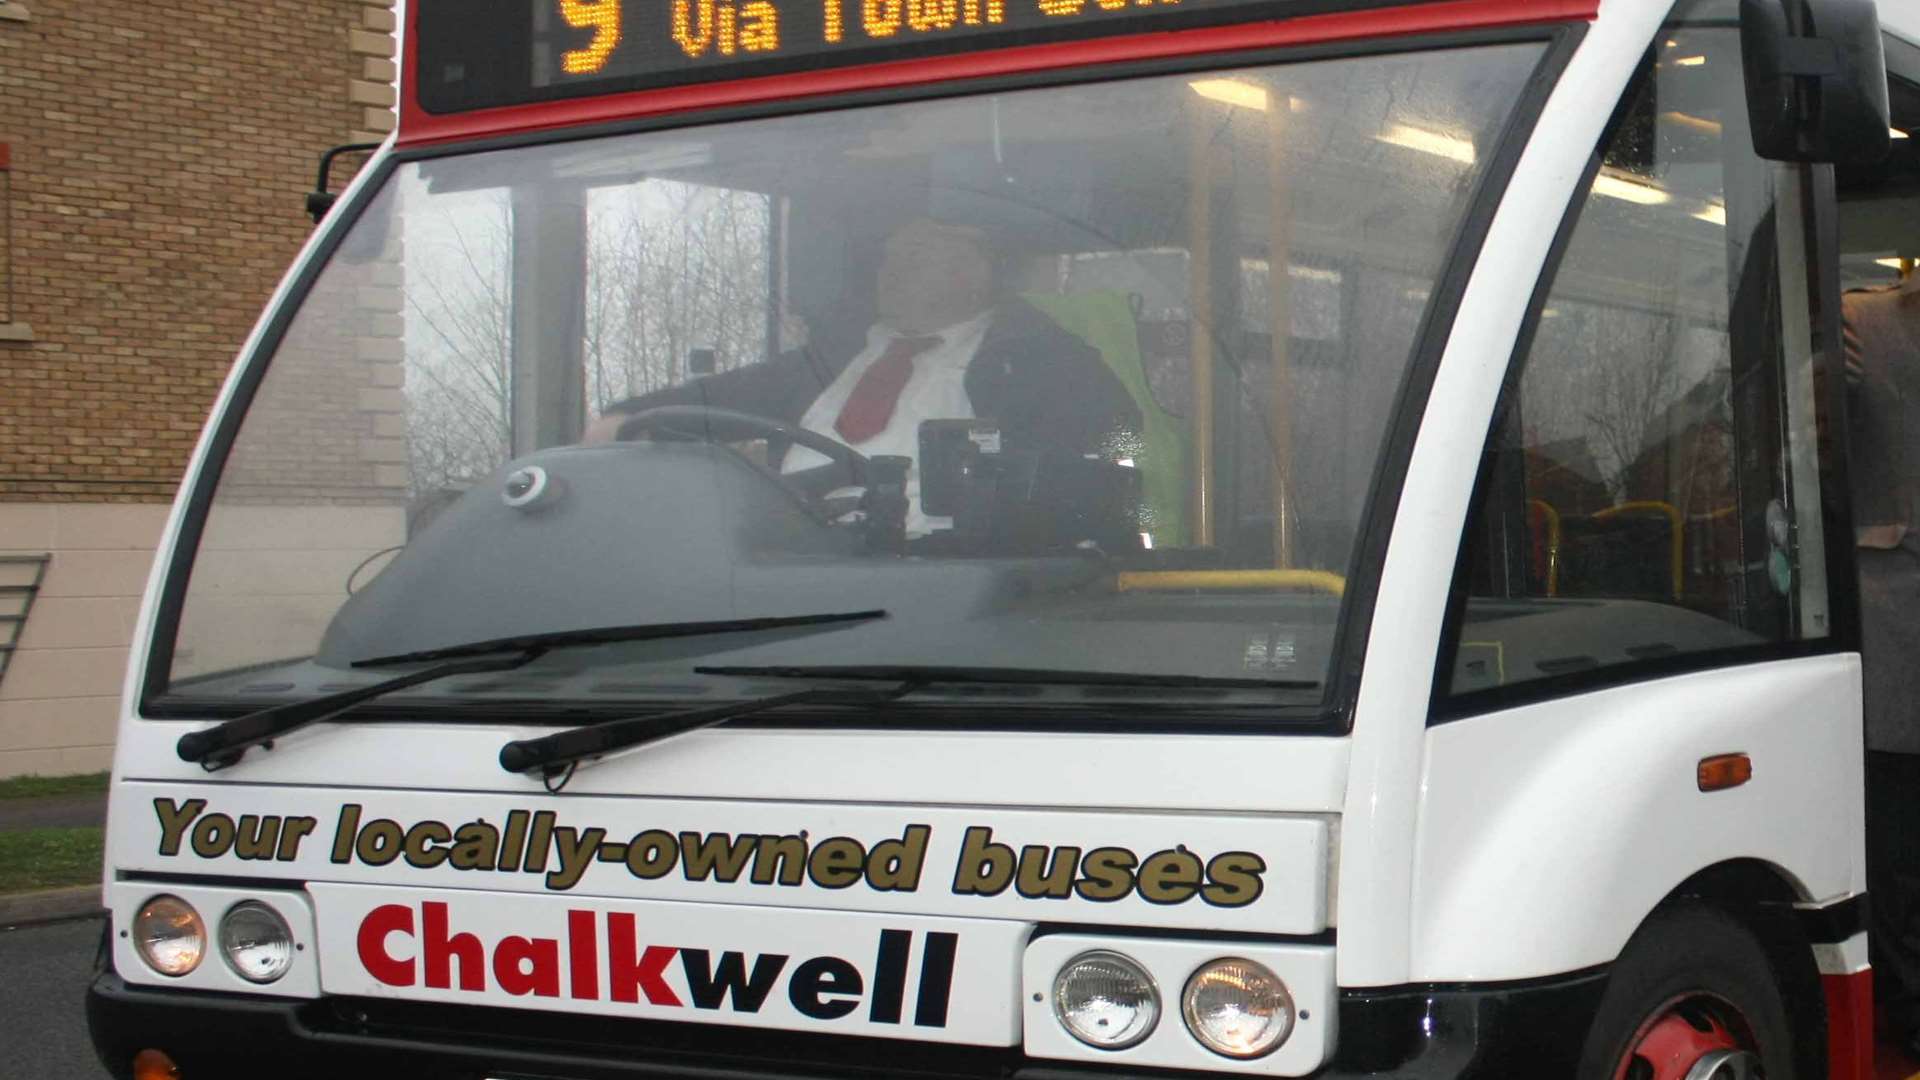 A Chalkwell bus